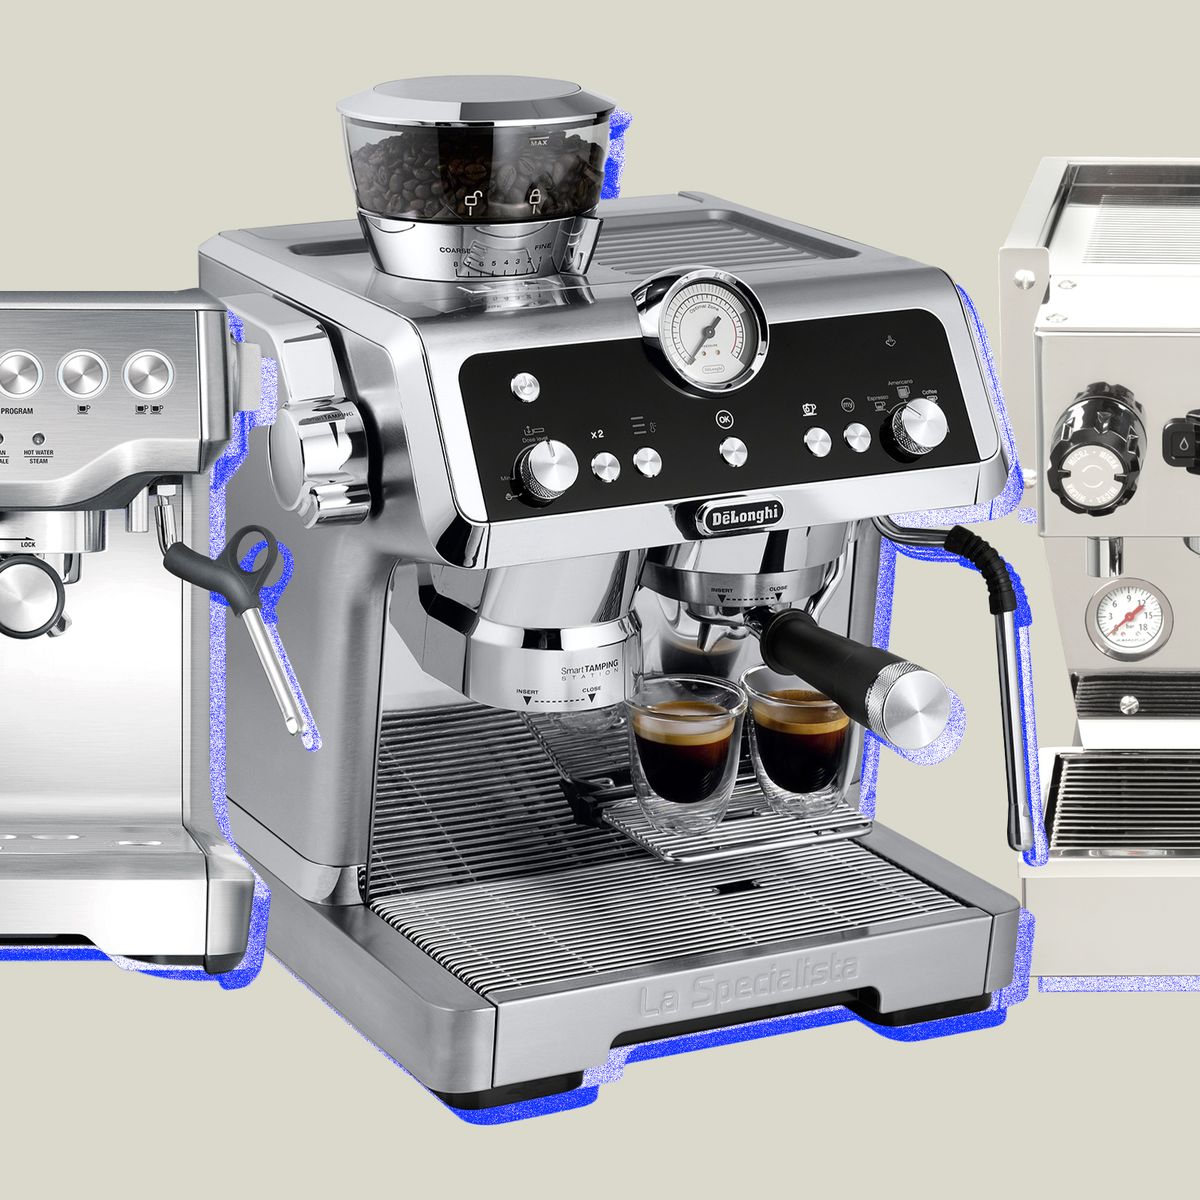 The 8 best espresso machines for home baristas